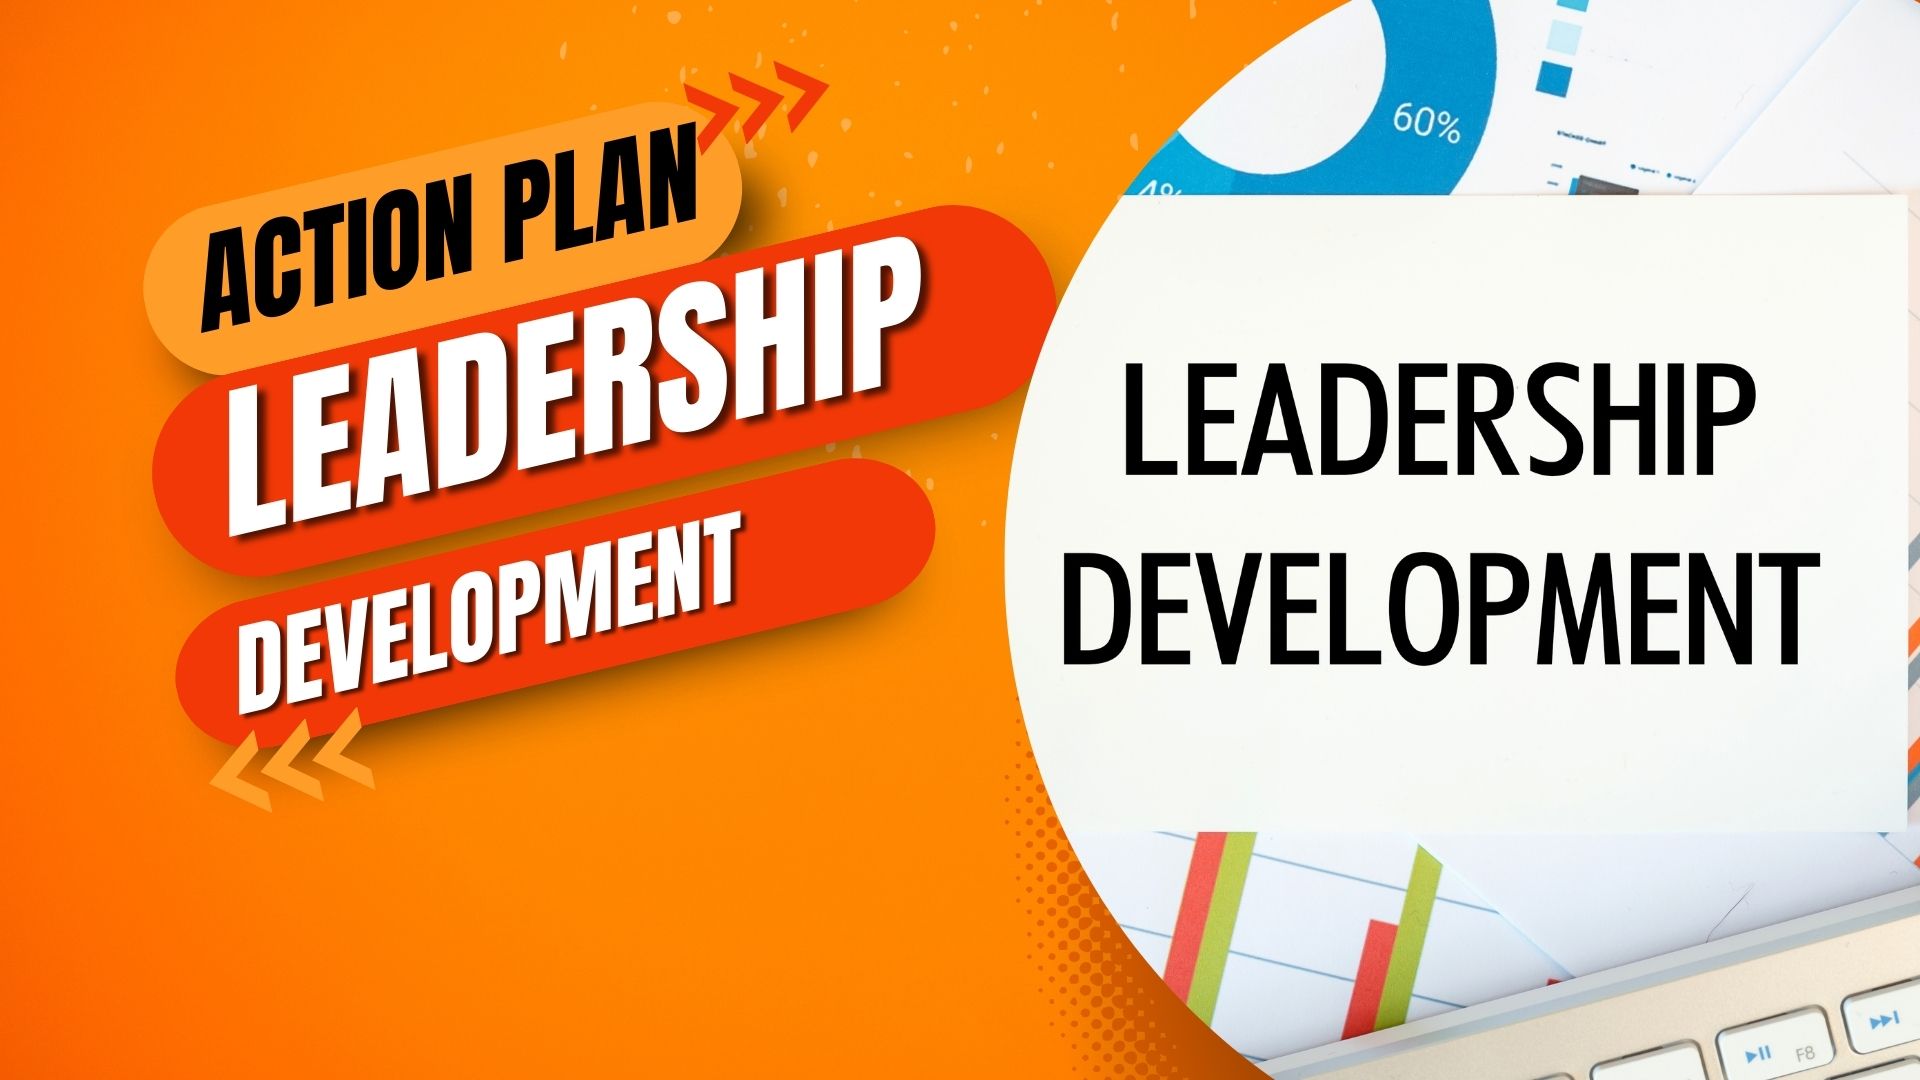 Action Plan for Leadership Development